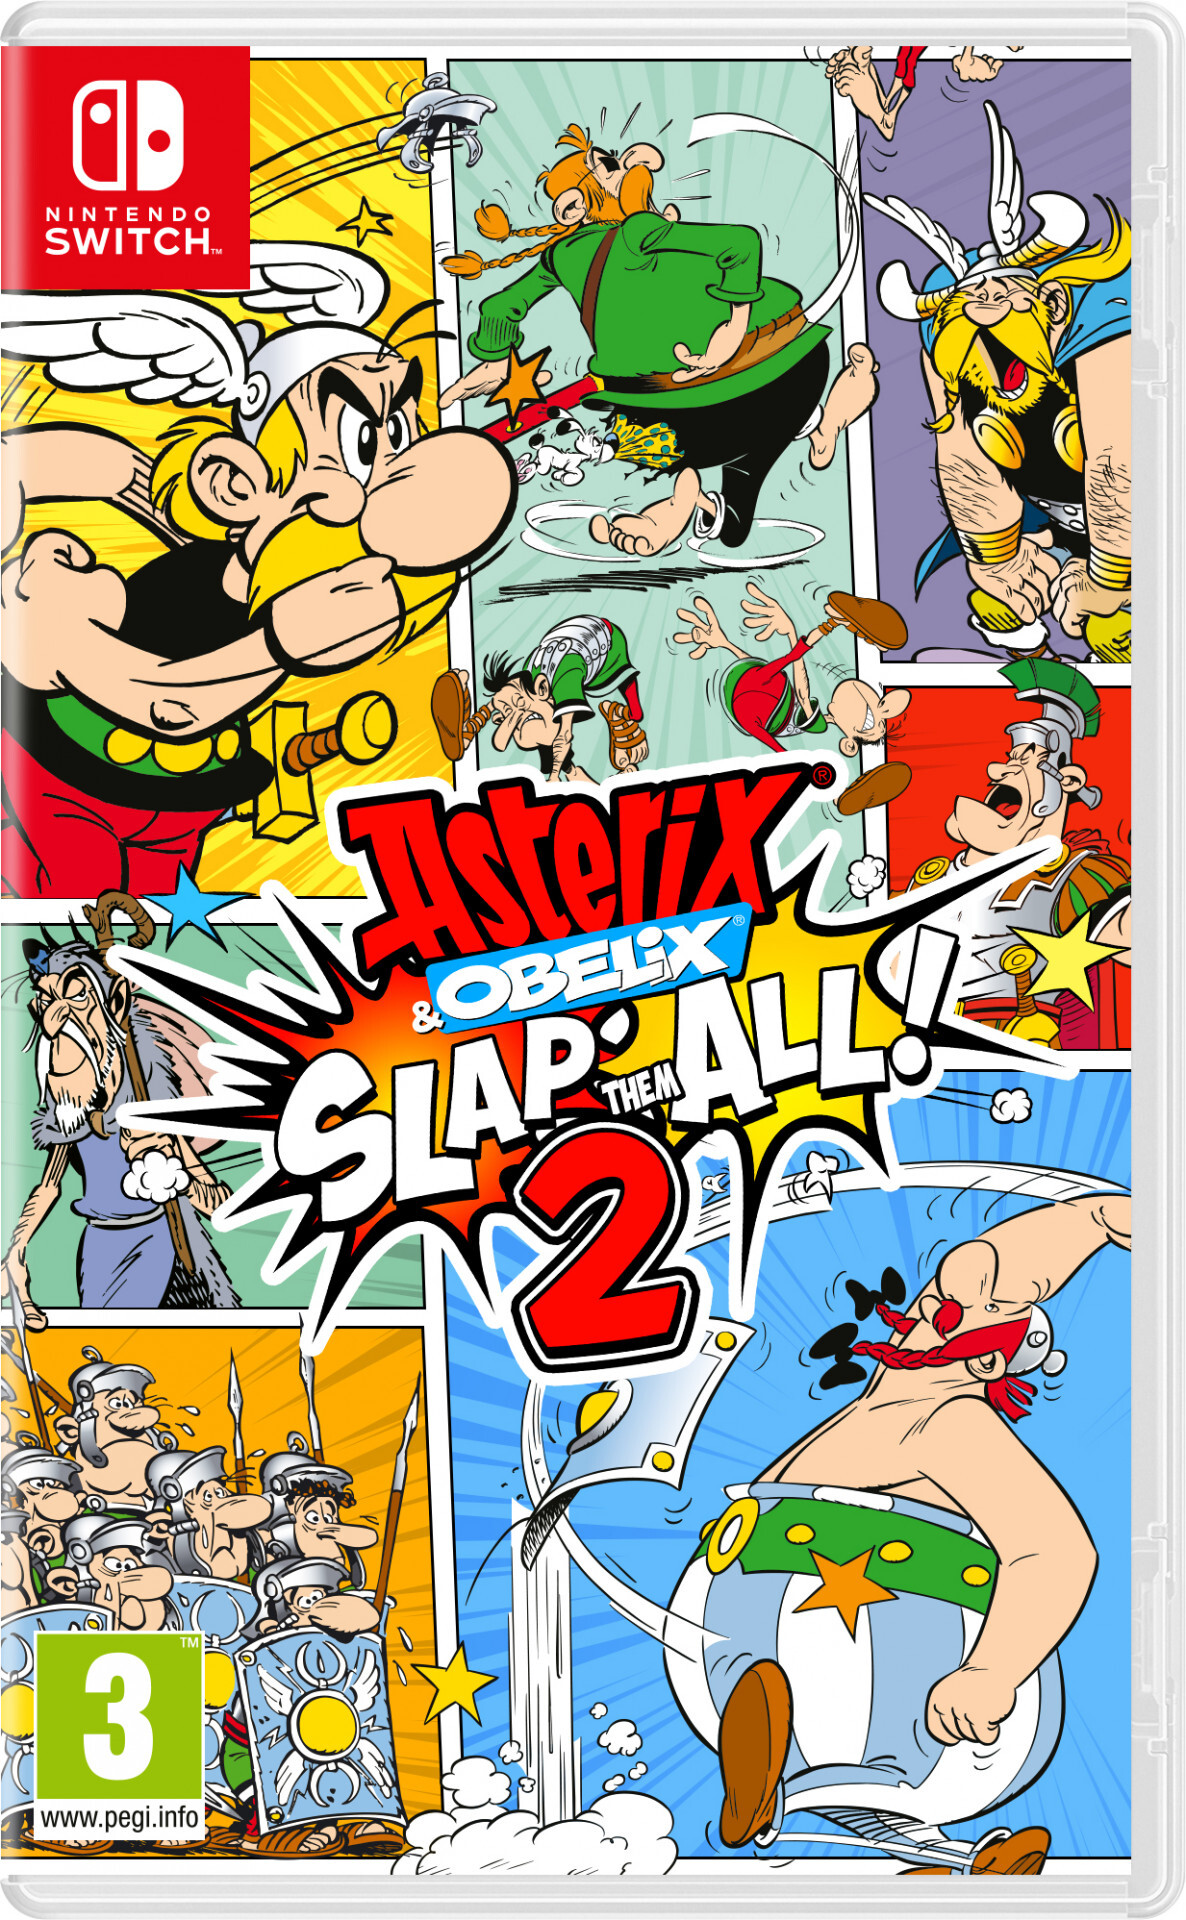 Mindscape asterix & obelix: slap them all! 2 Nintendo Switch